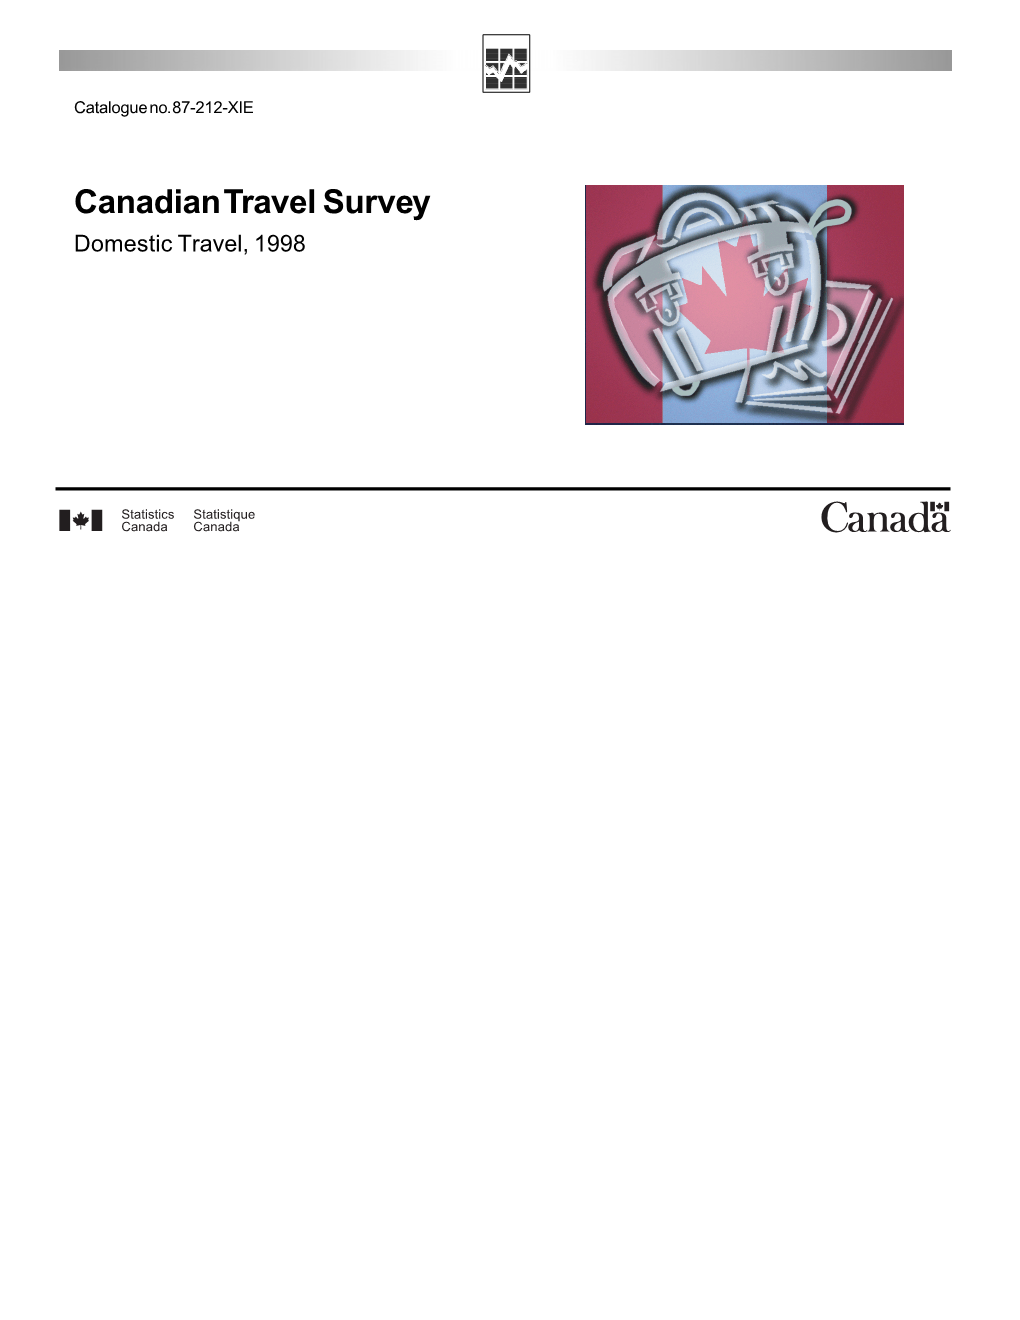 Canadian Travel Survey Domestic Travel, 1998